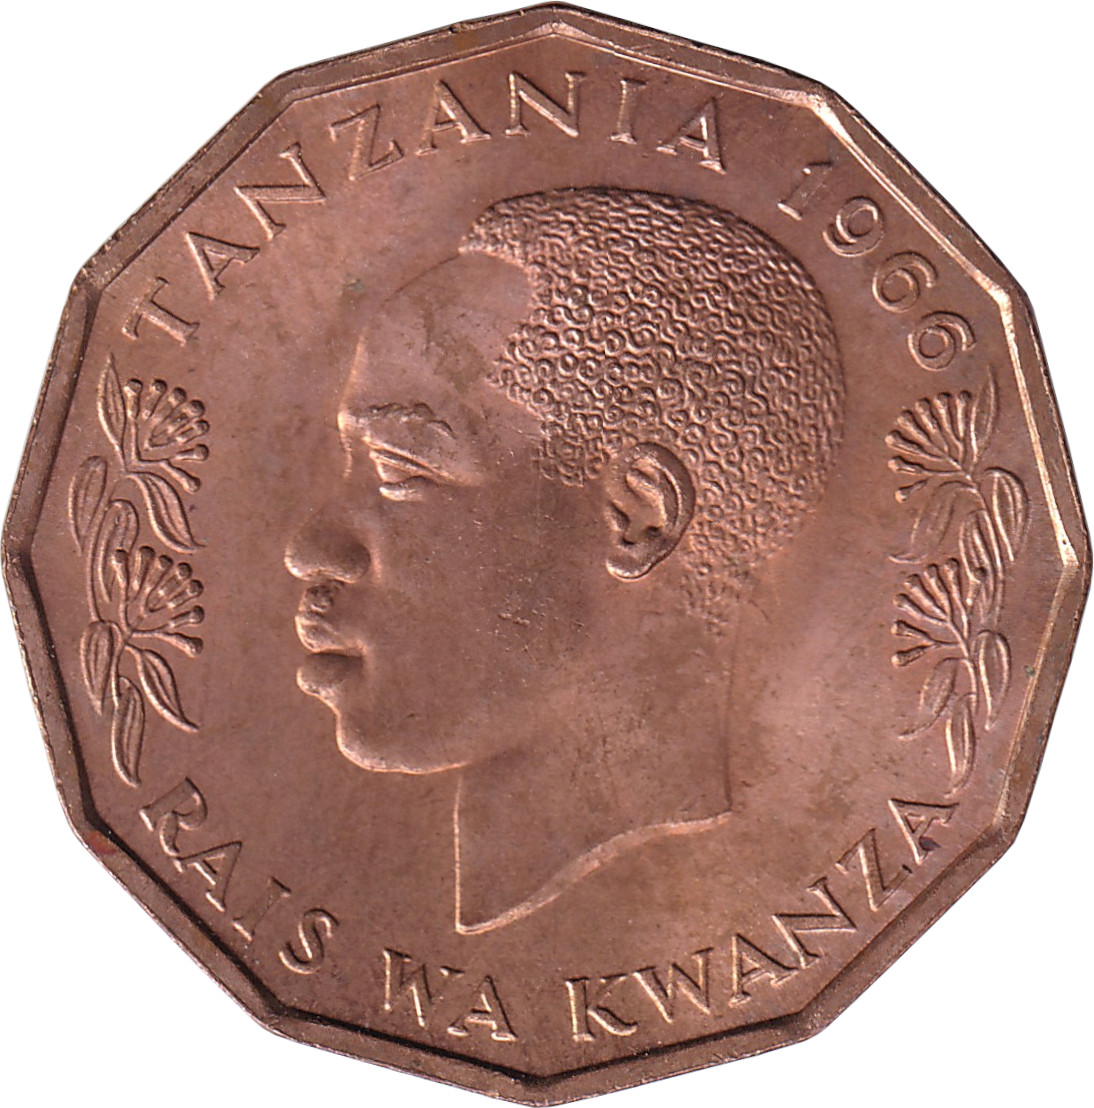 5 senti - President J.K. Nyerere